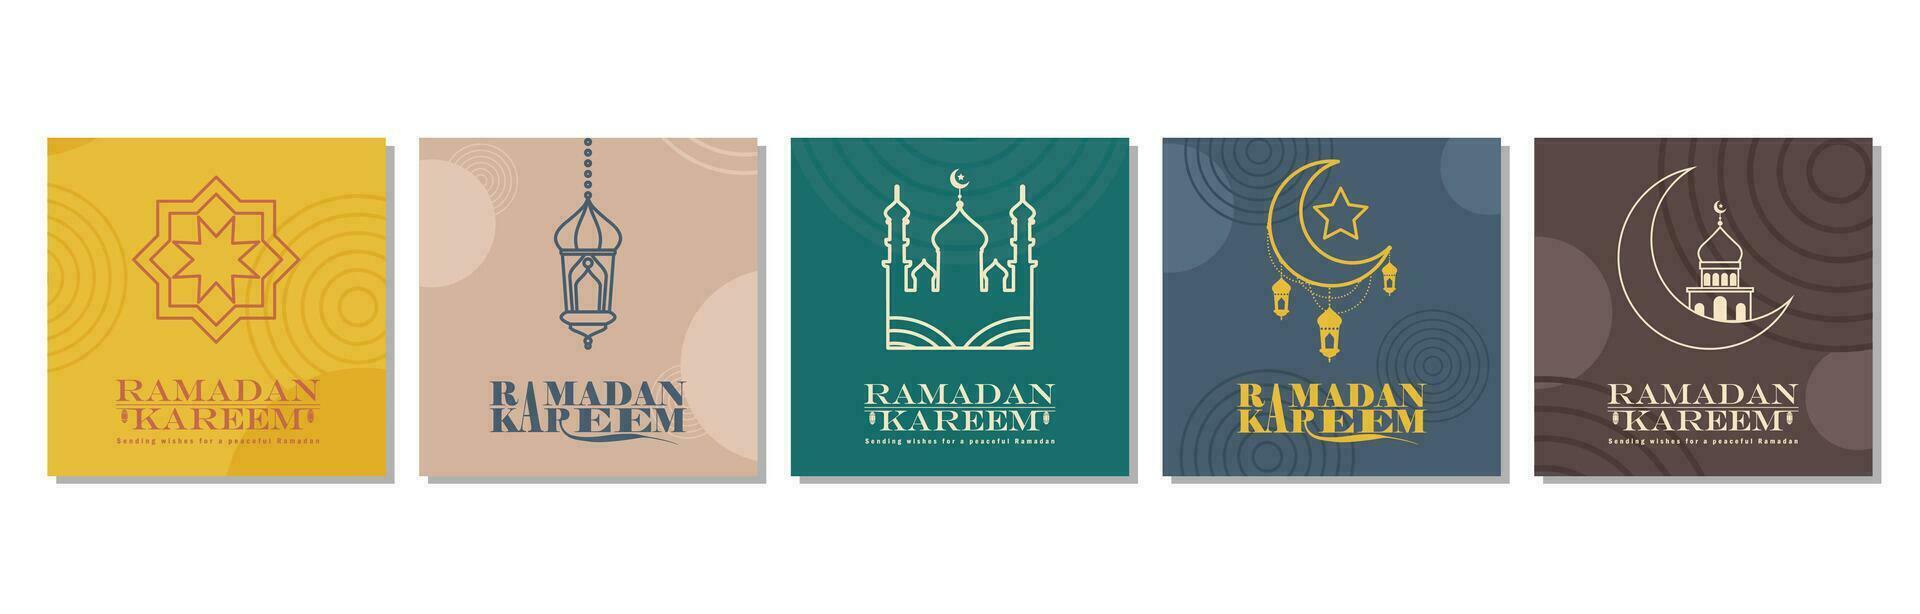 Islamic greeting card set template with ramadan for wallpaper design Poster, social media post, media banner vector